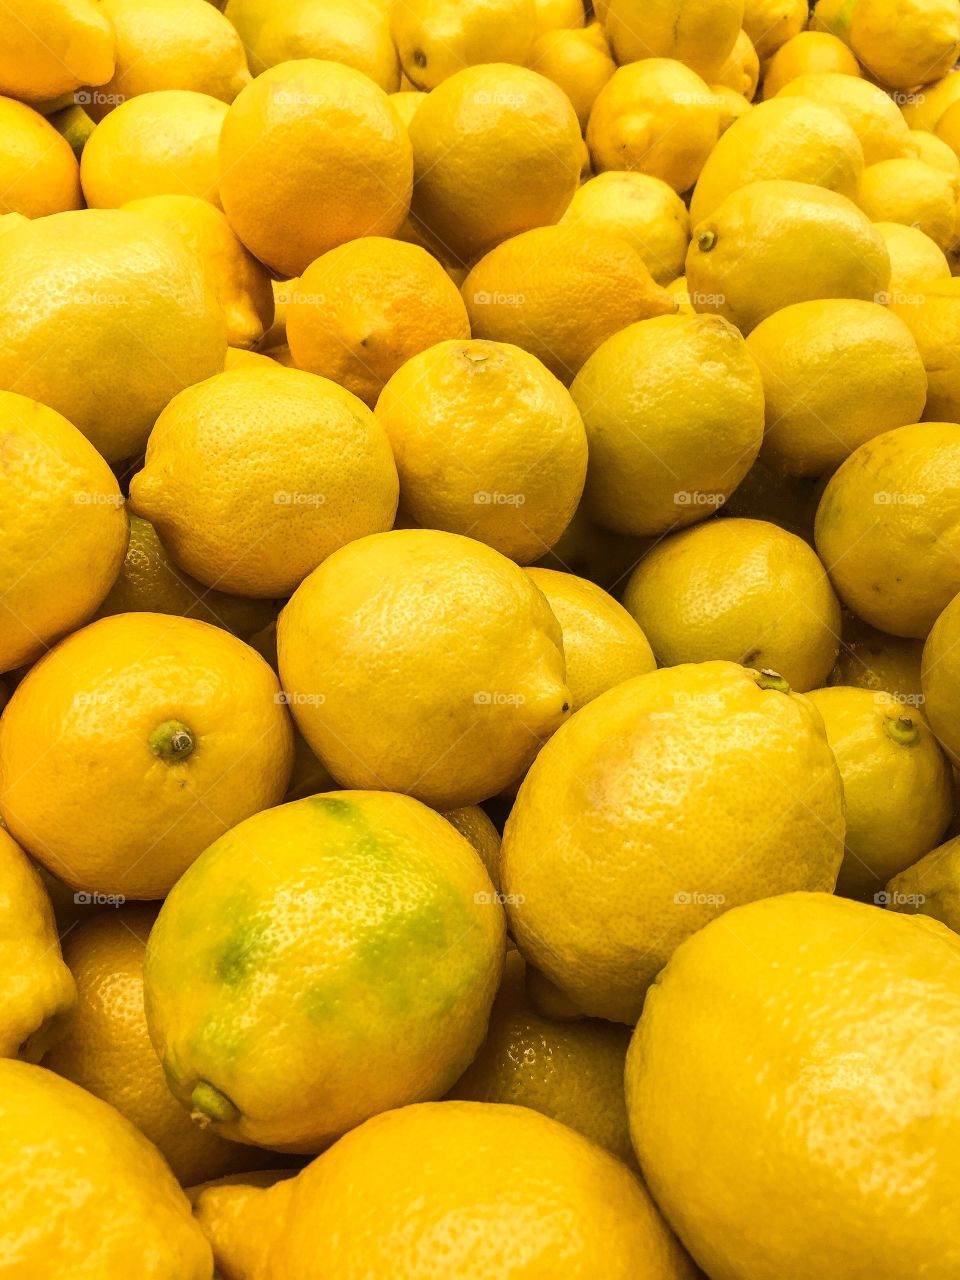 Lemons - Yellow Mission